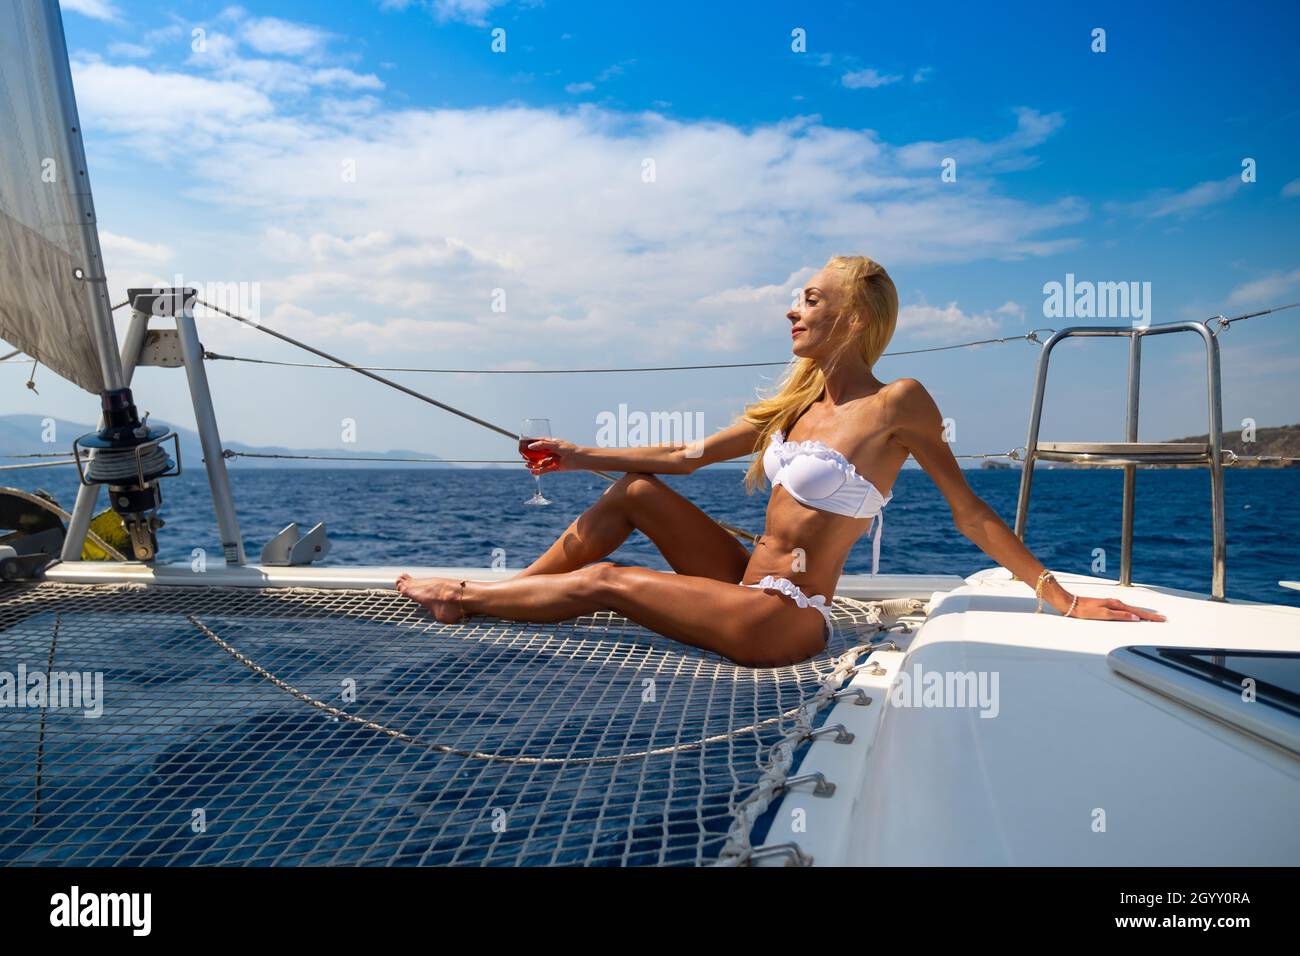 Woman in bikini tanning and relaxing drinking wine on a summer catamaran sailing cruise Stock Photo